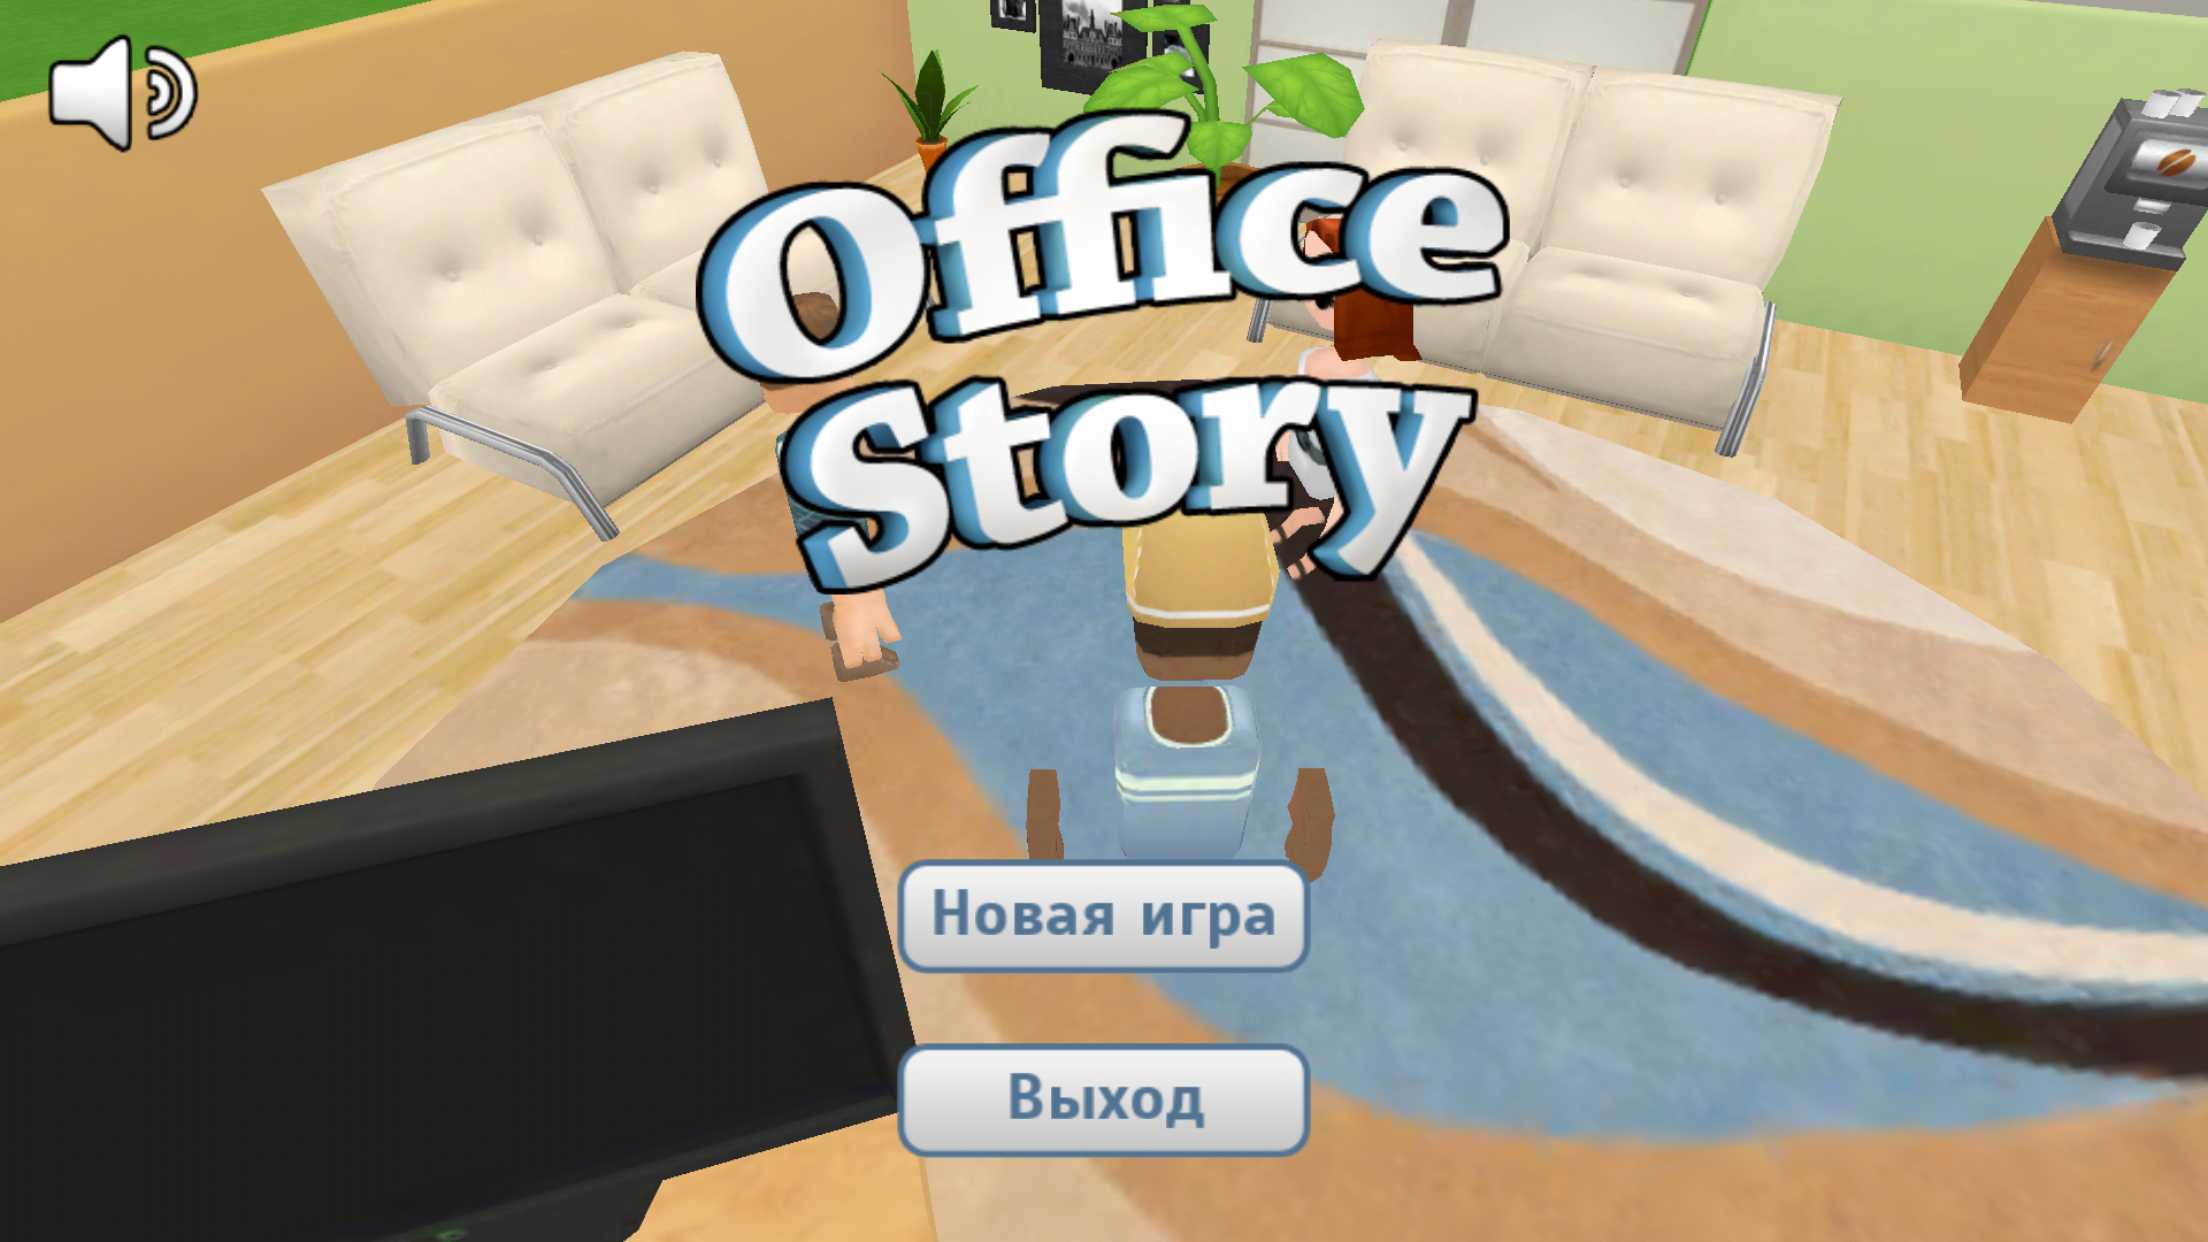 Игра Office story. Андроид Office story. Continue the story game. IOS Hack.